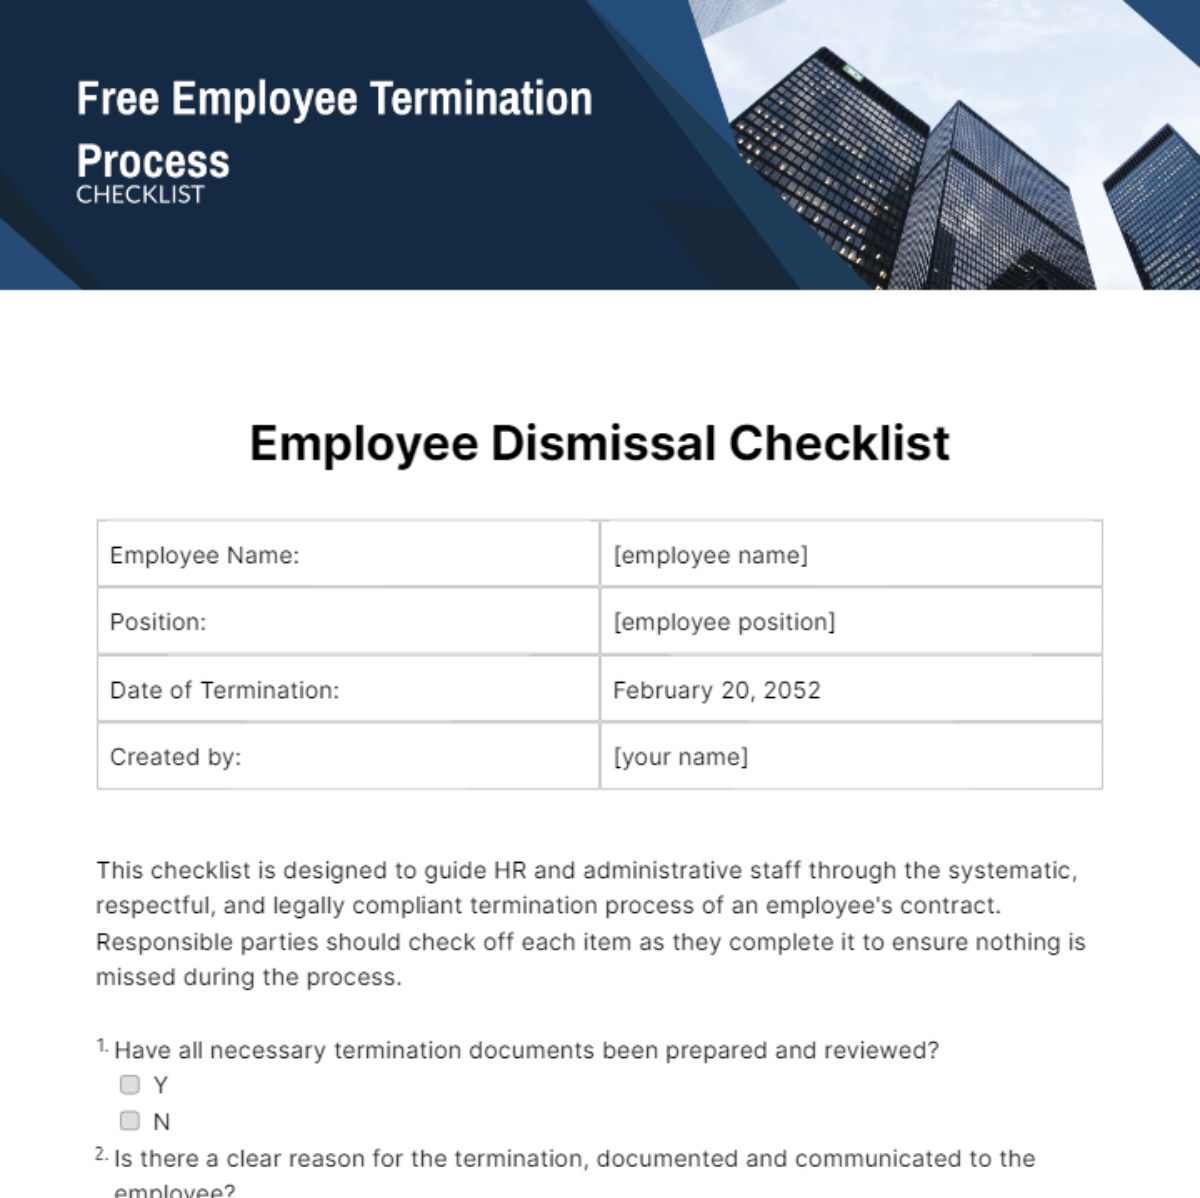 Free Employee Termination Process Checklist Template